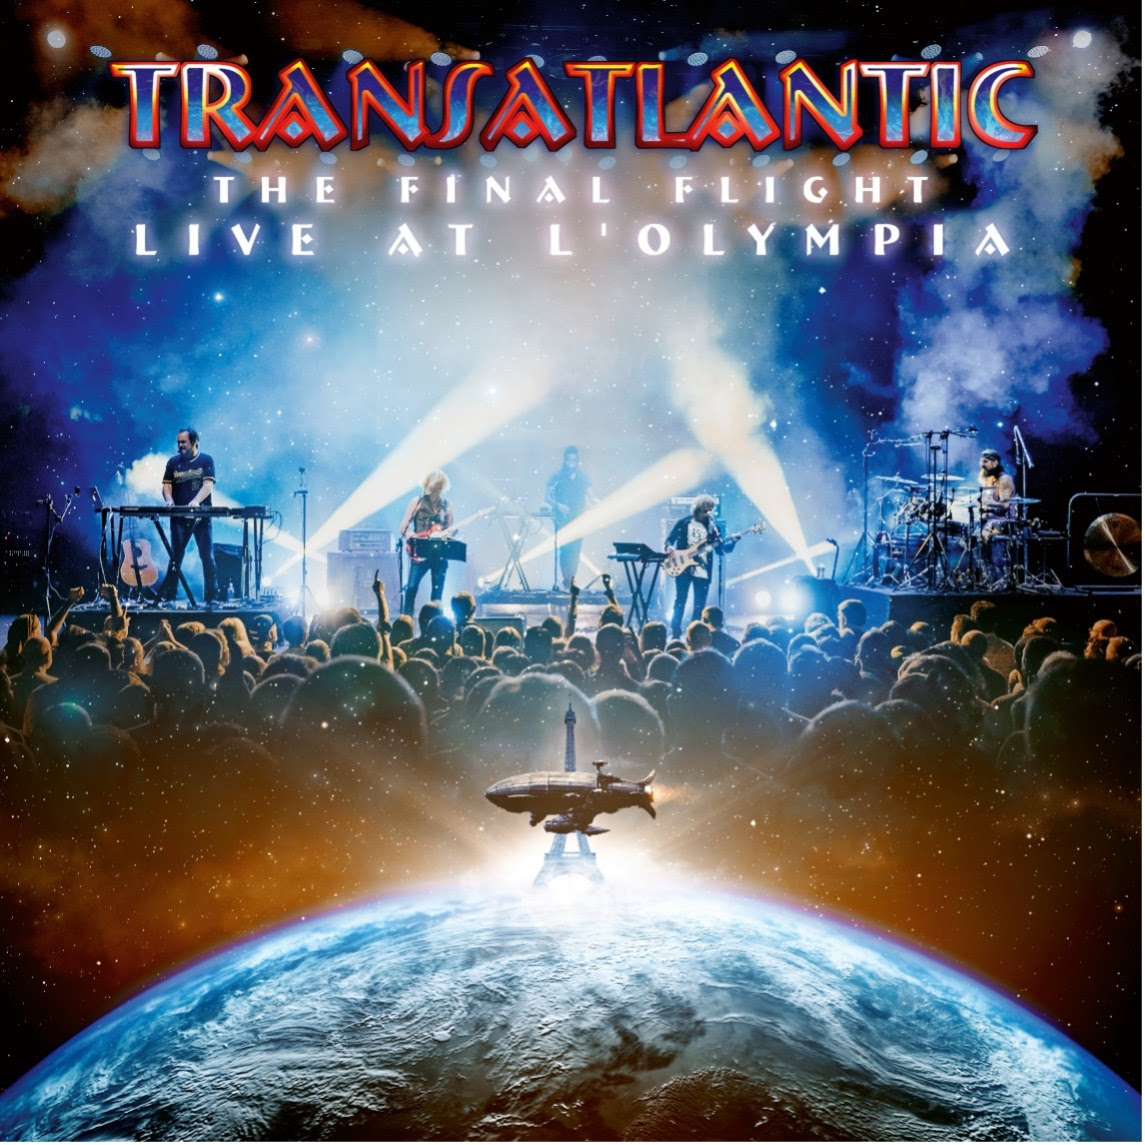 TRANSATLANTIC lanza en directo el vídeo de “We All Need Some Light”, extraído de “The Final Flight: Live at L’Olympia’